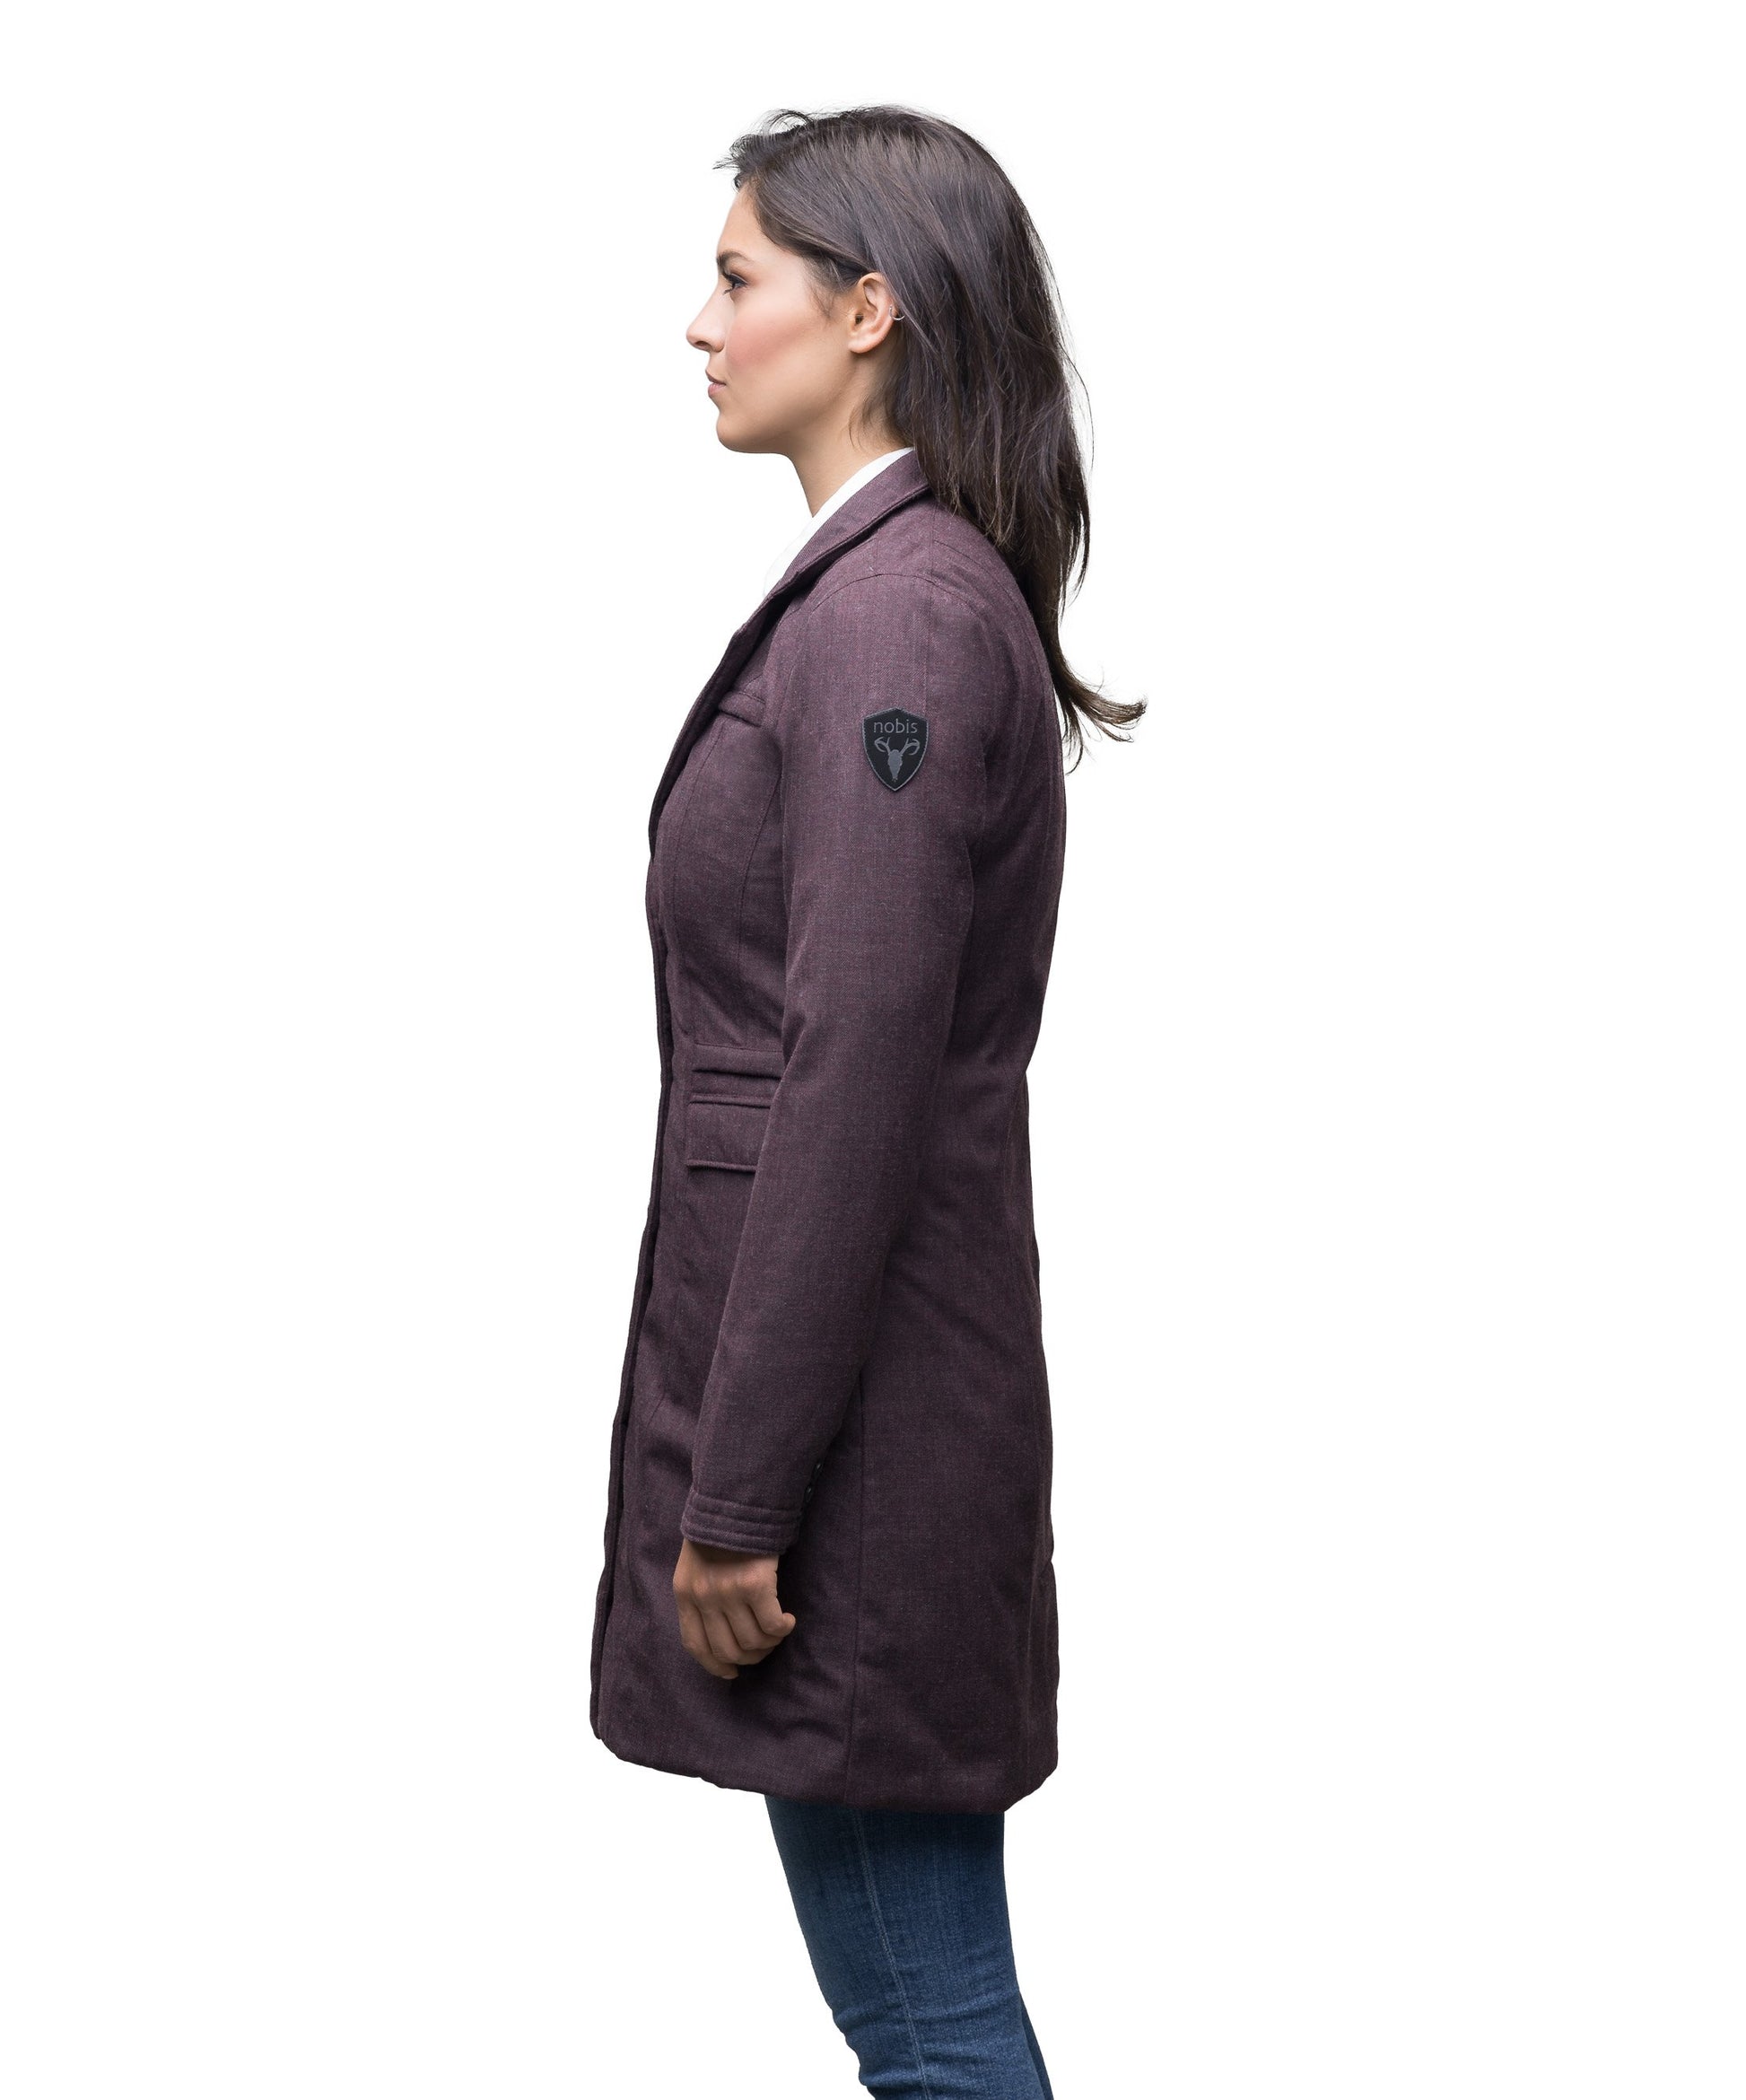 Women's mid length down filled overcoat in H. Burgundy, H Black or H Navy